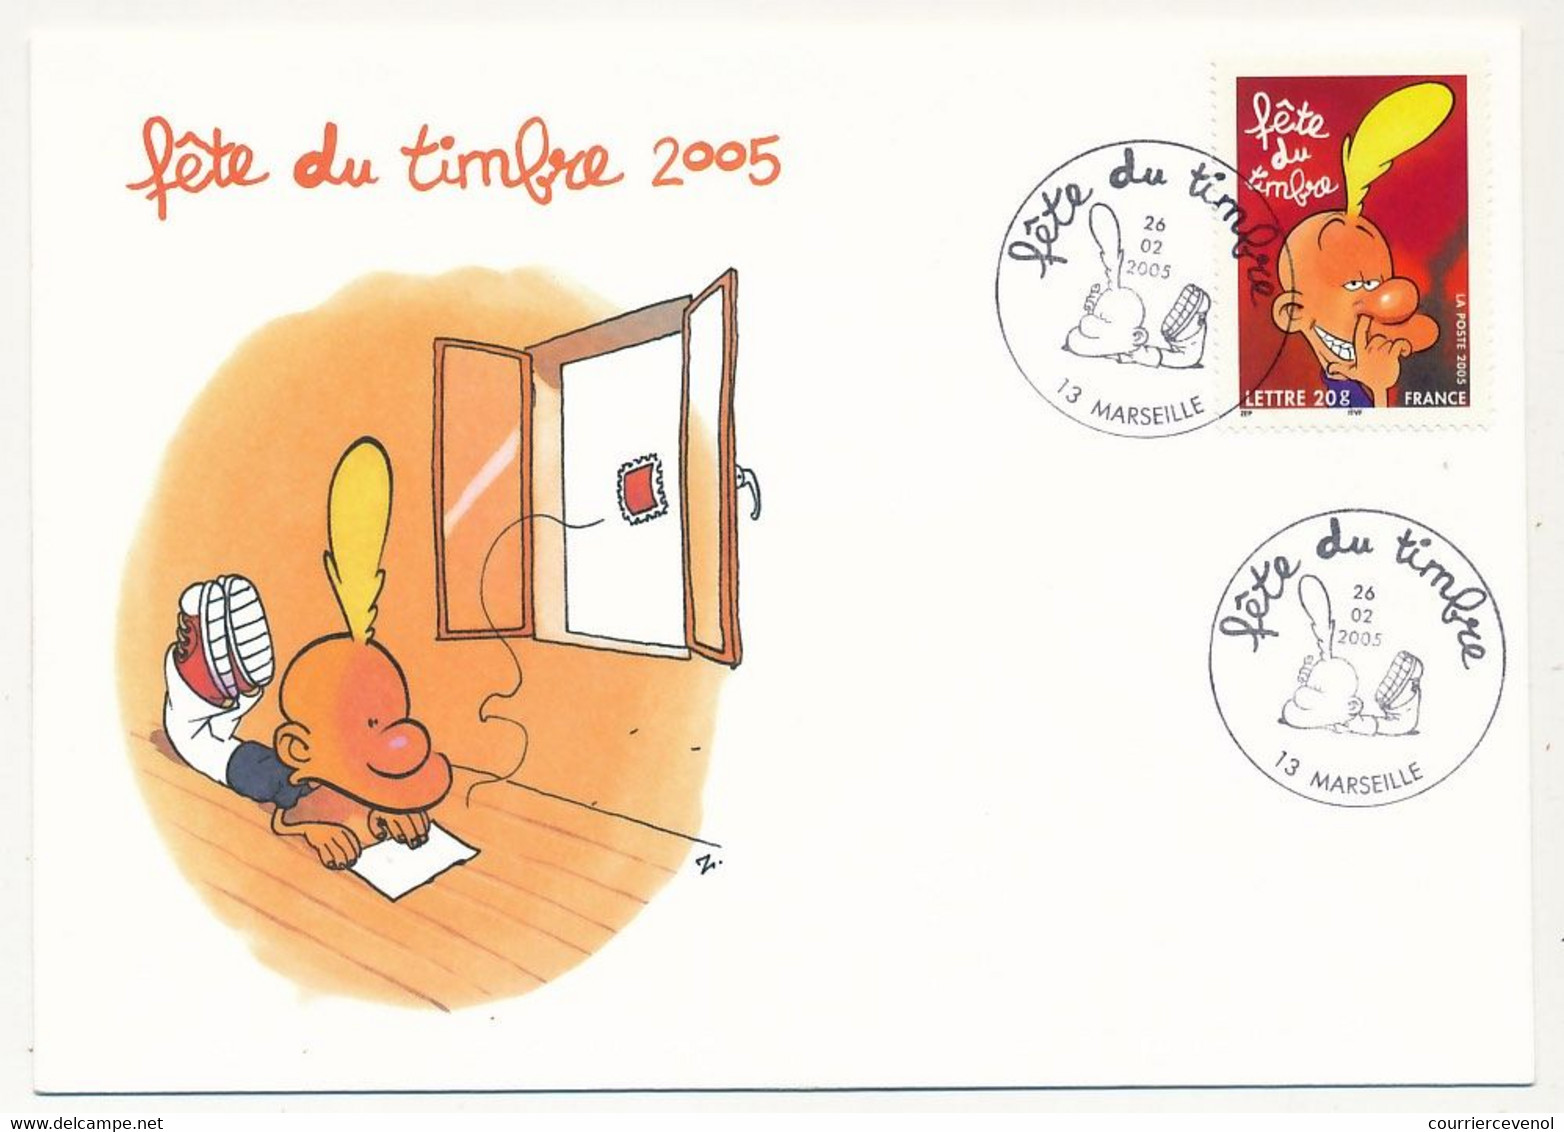 France - 2 Enveloppes Fédérales - Fête Du Timbre 2005 - TITEUF - Oblit. 13 MARSEILLE - 26.02.2005 - Briefe U. Dokumente